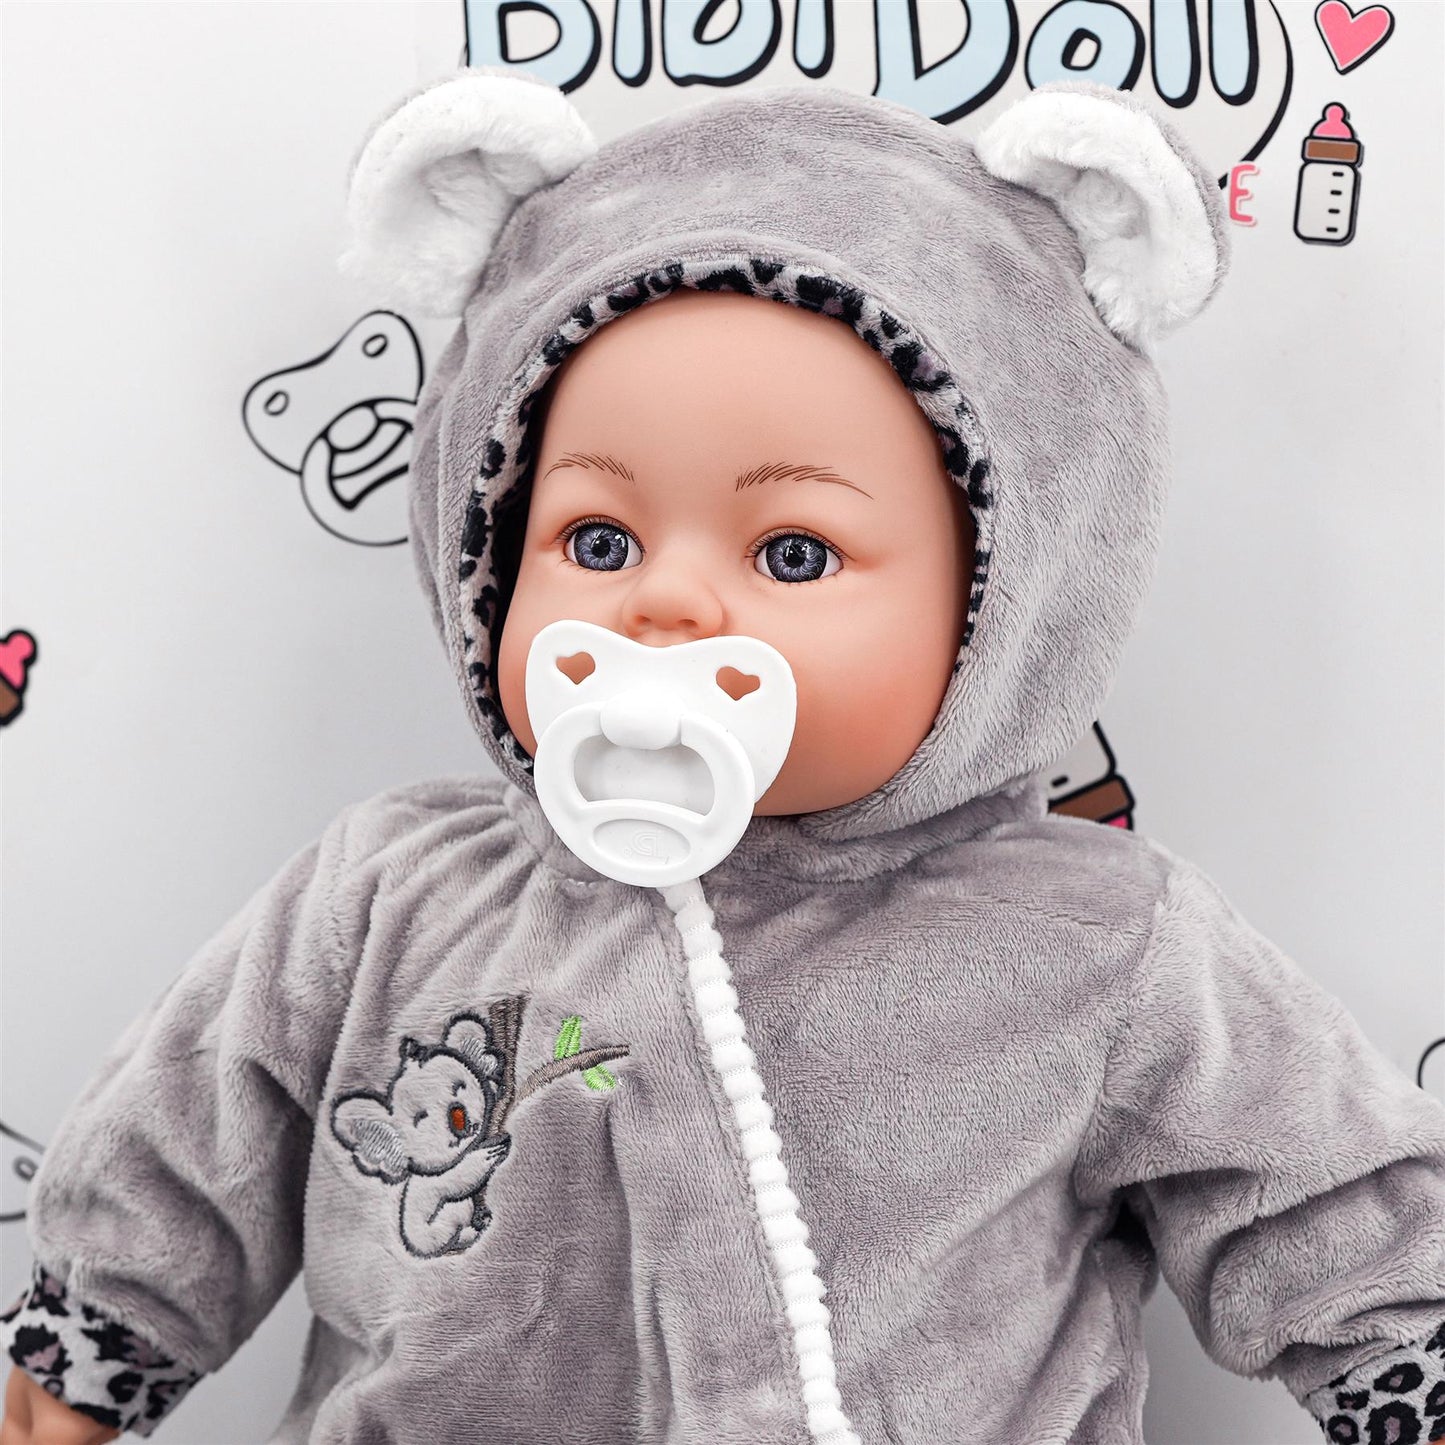 18” Boy Doll Grey and Stripy Clothes Set by BiBi Doll - UKBuyZone